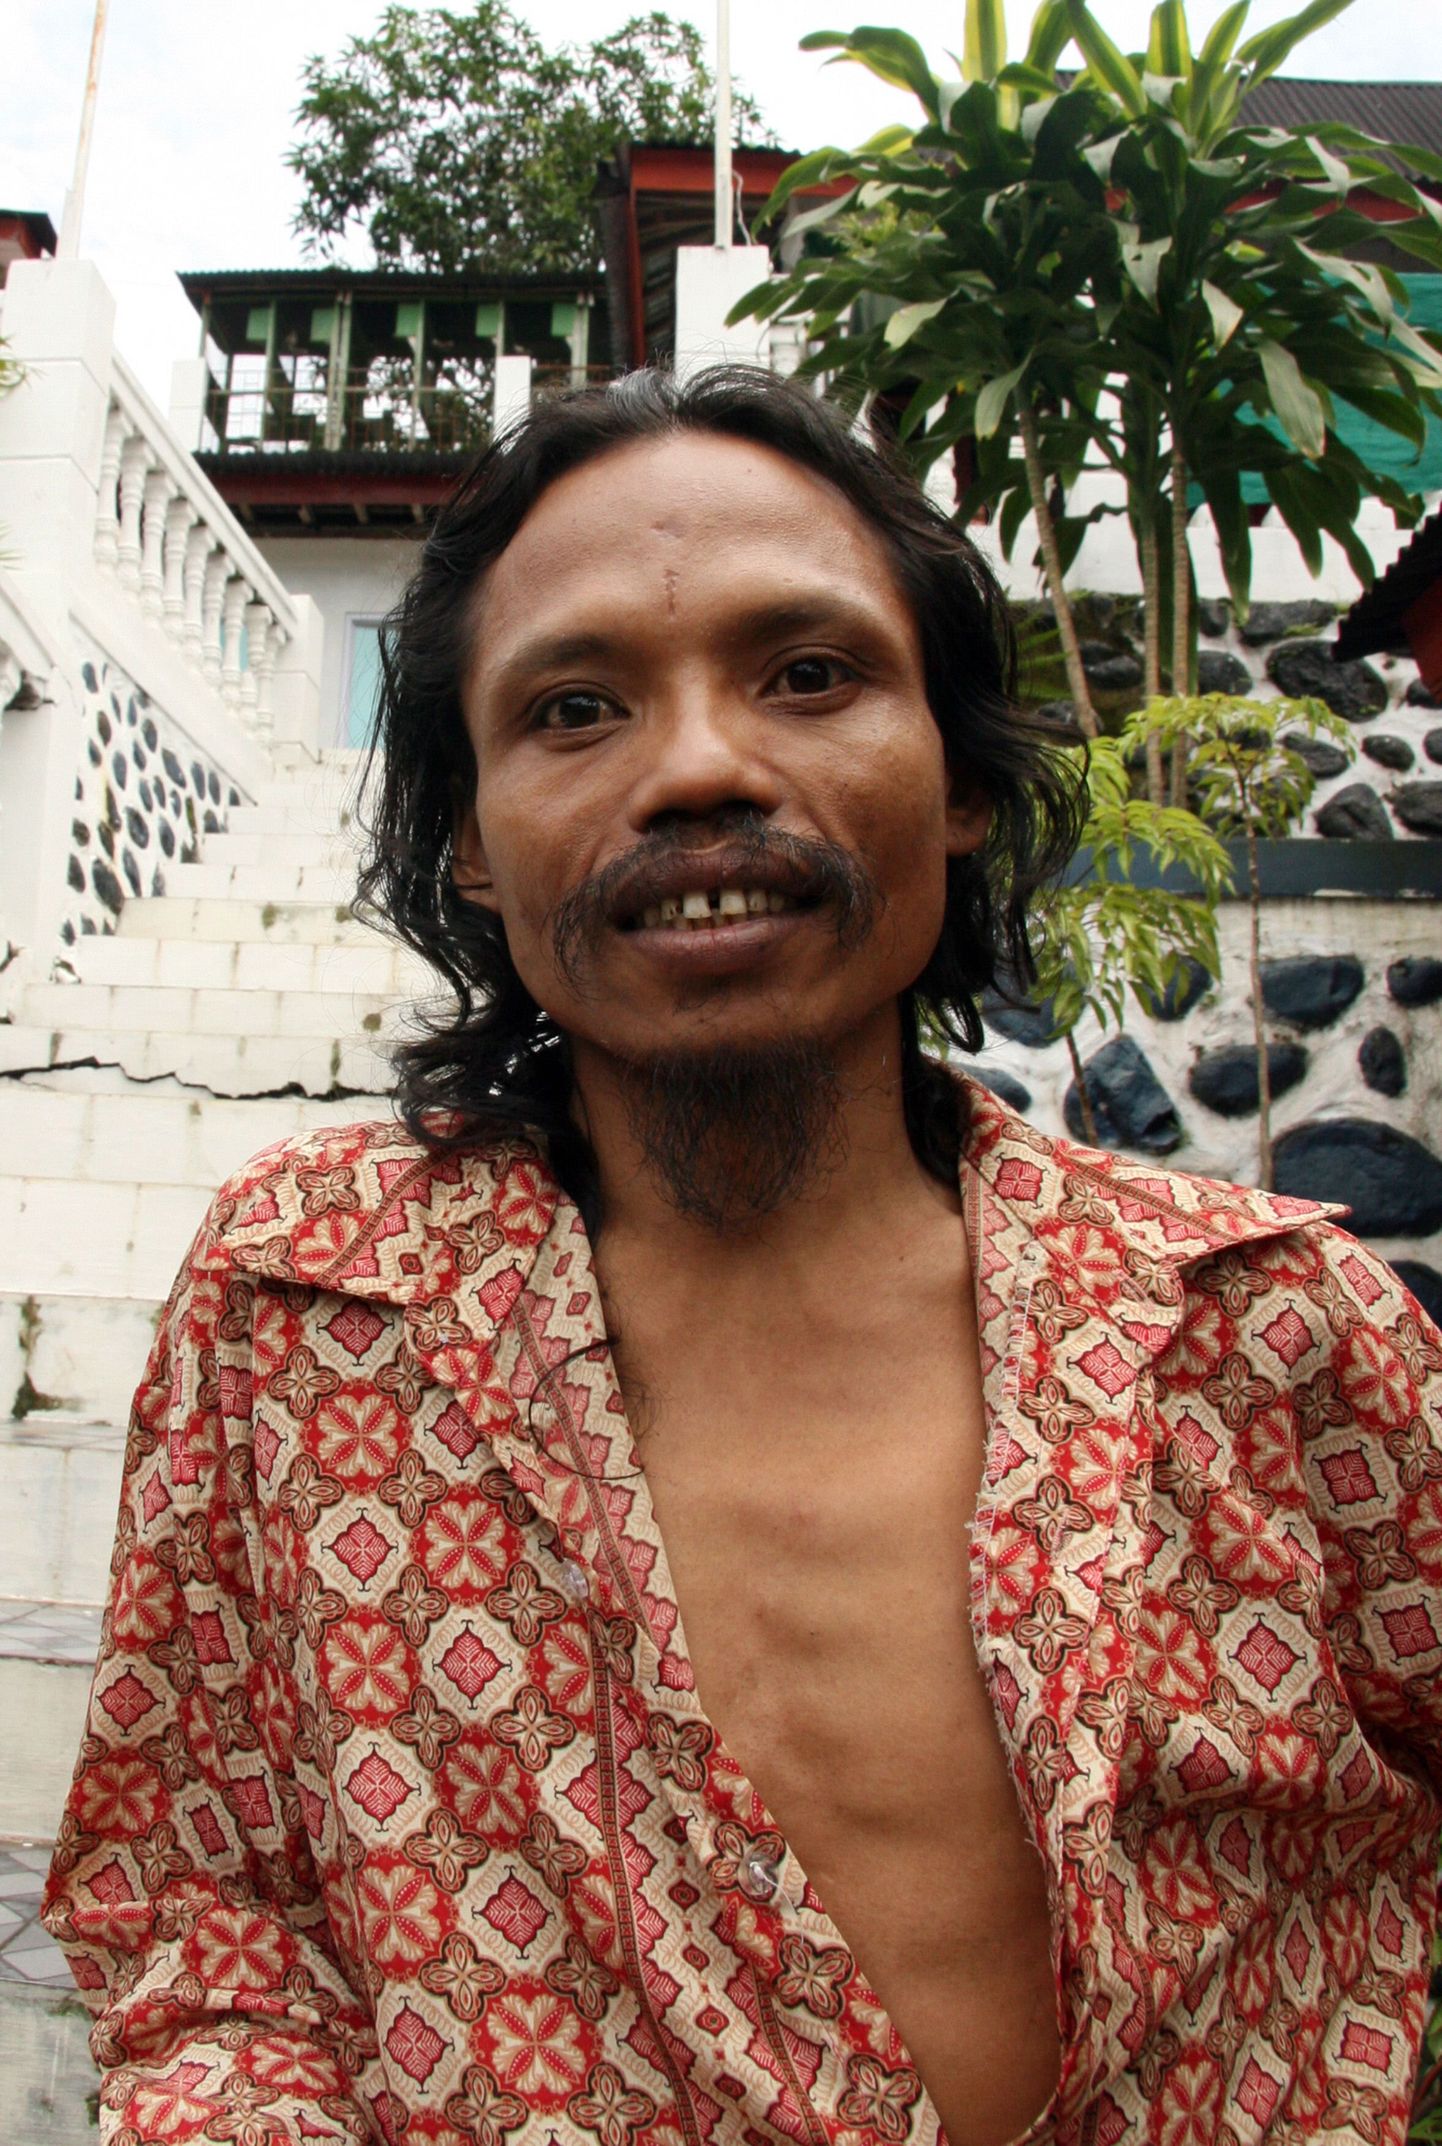 Indoneesia endine kannibal Sumanto